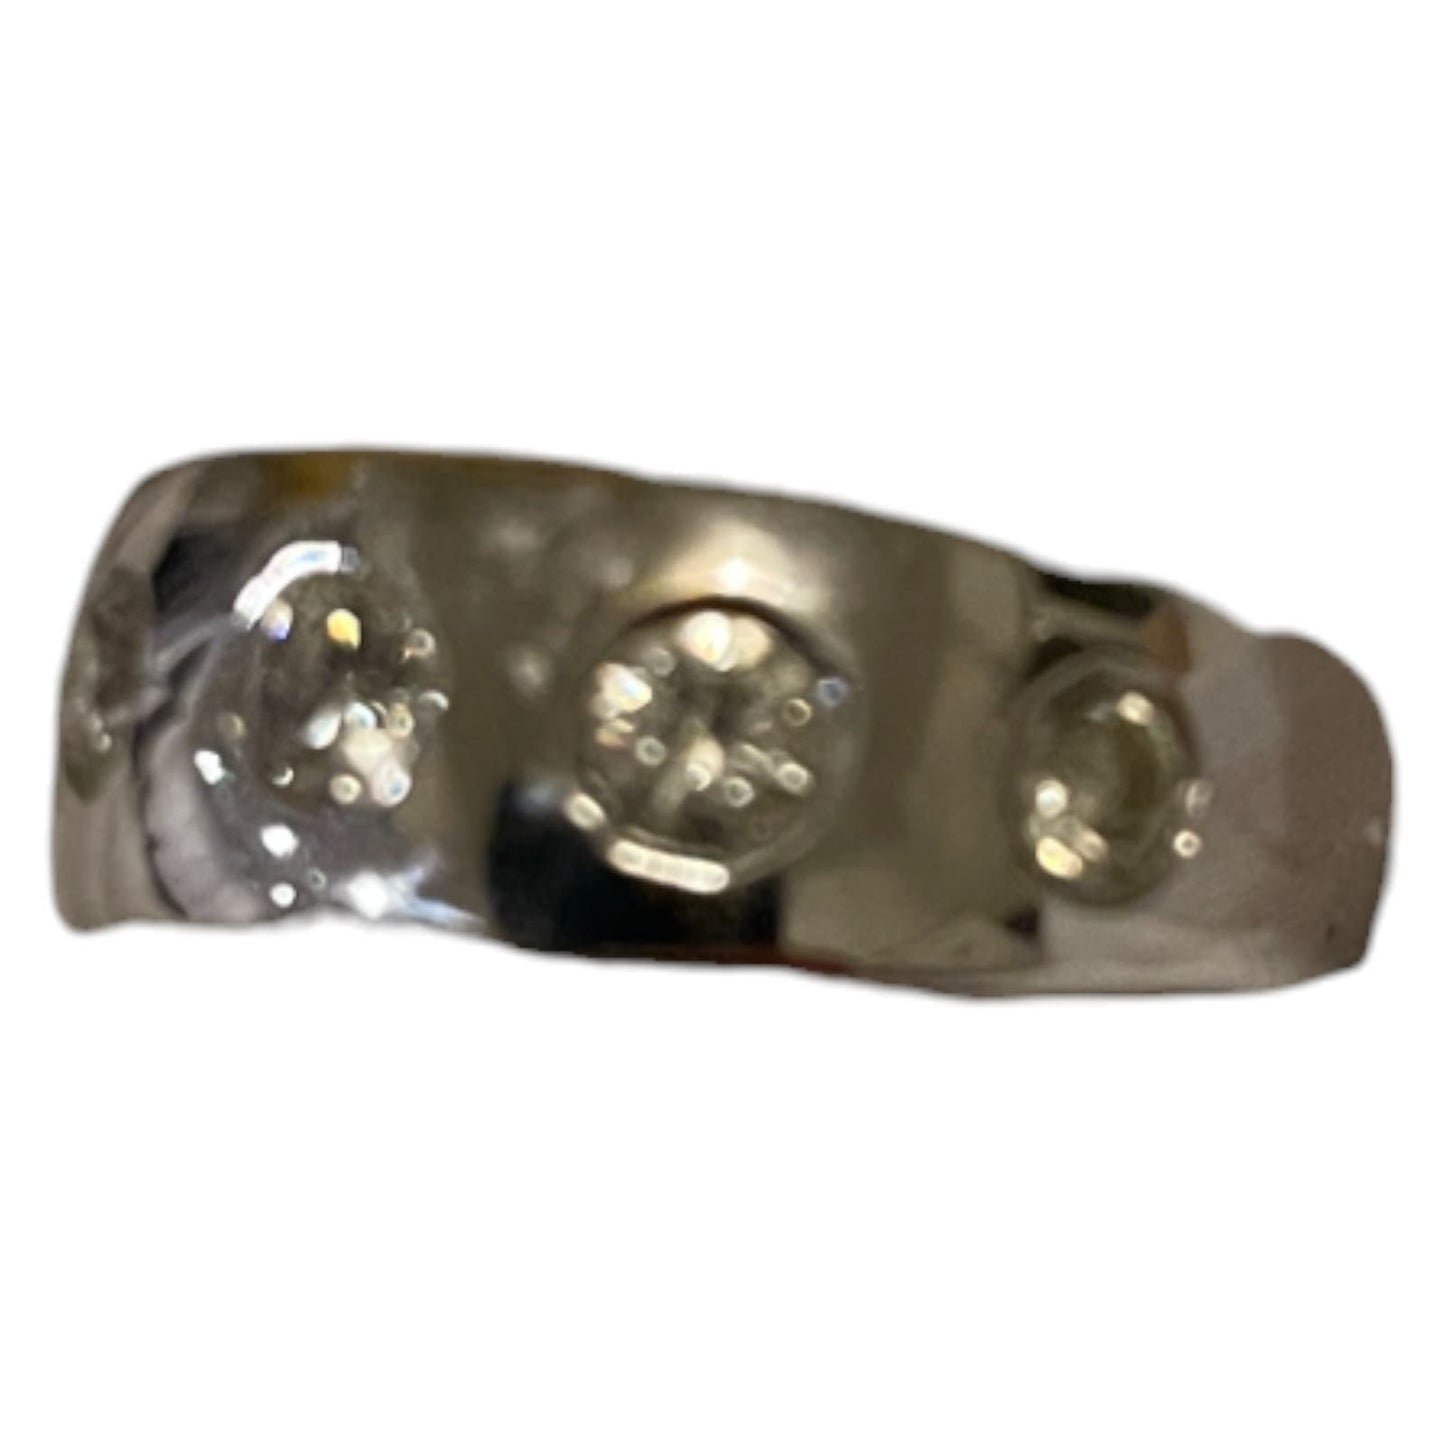 Timeless 14K White Gold .60 Ct Bezel Diamond Ring, Size 7.5, Made in USA